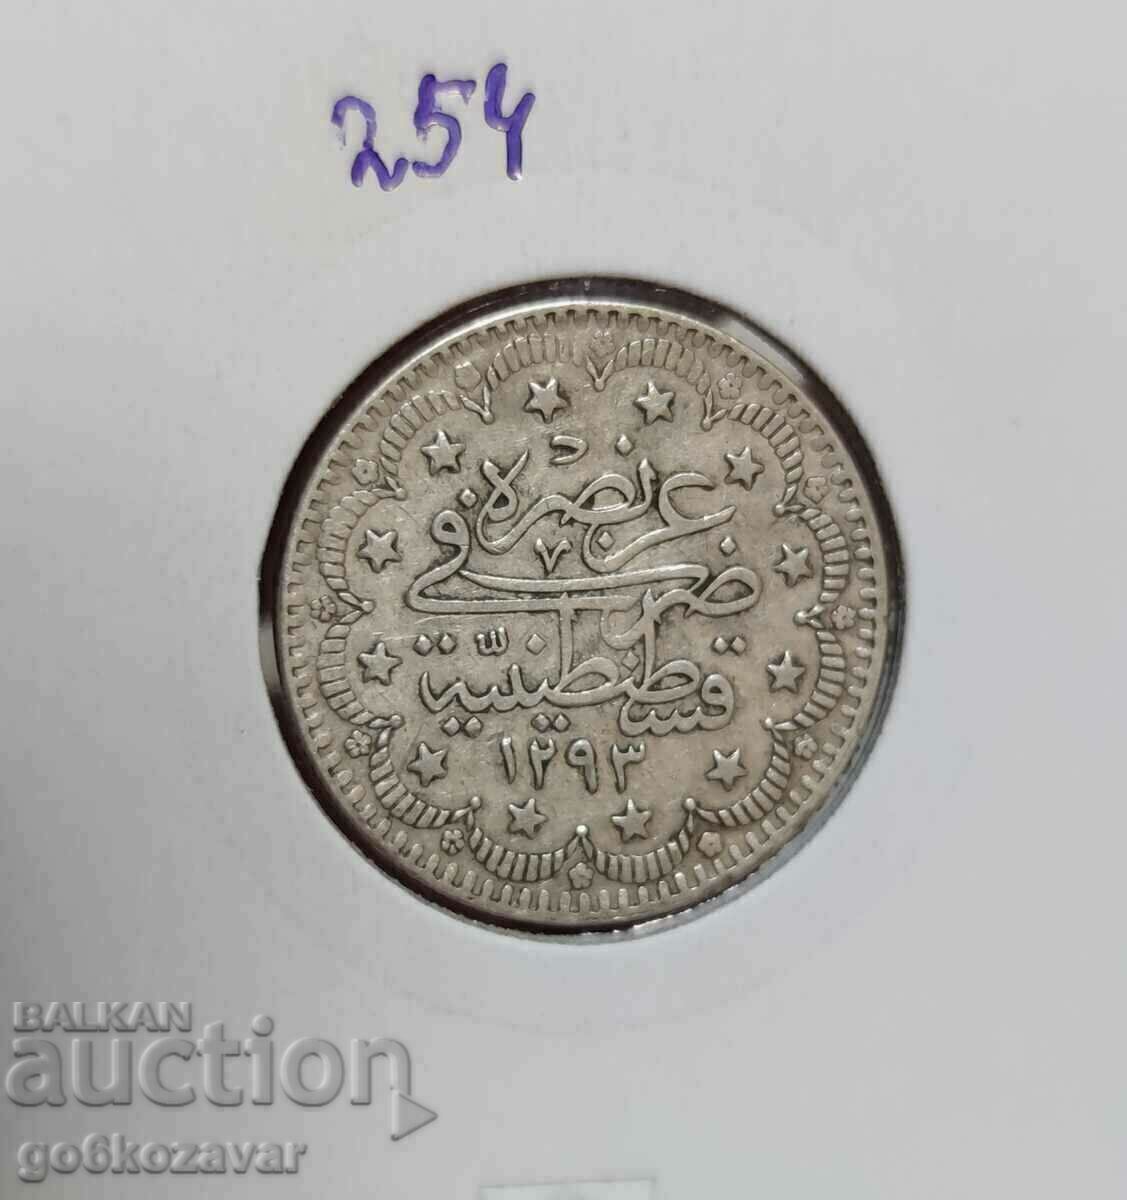 Османска Империя 5 Куруша 1296-1876г Сребро цифра 33 RARE